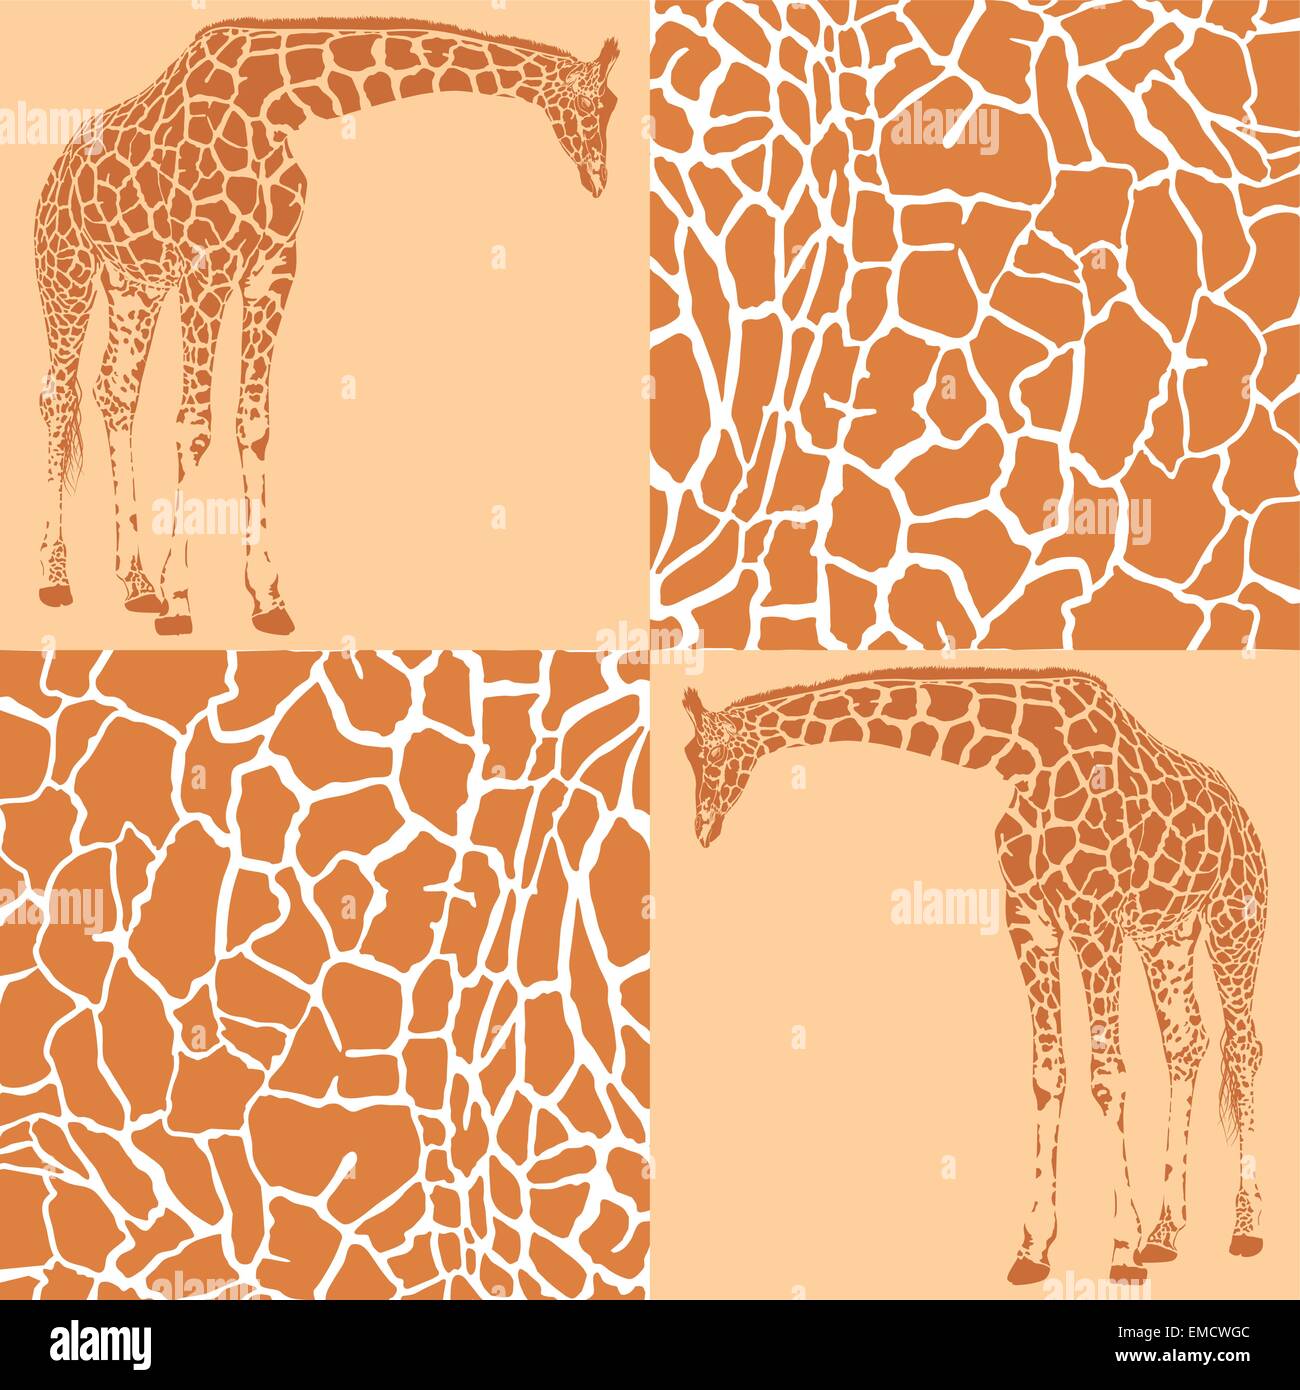 Giraffe patterns for wallpaper Stock Vector